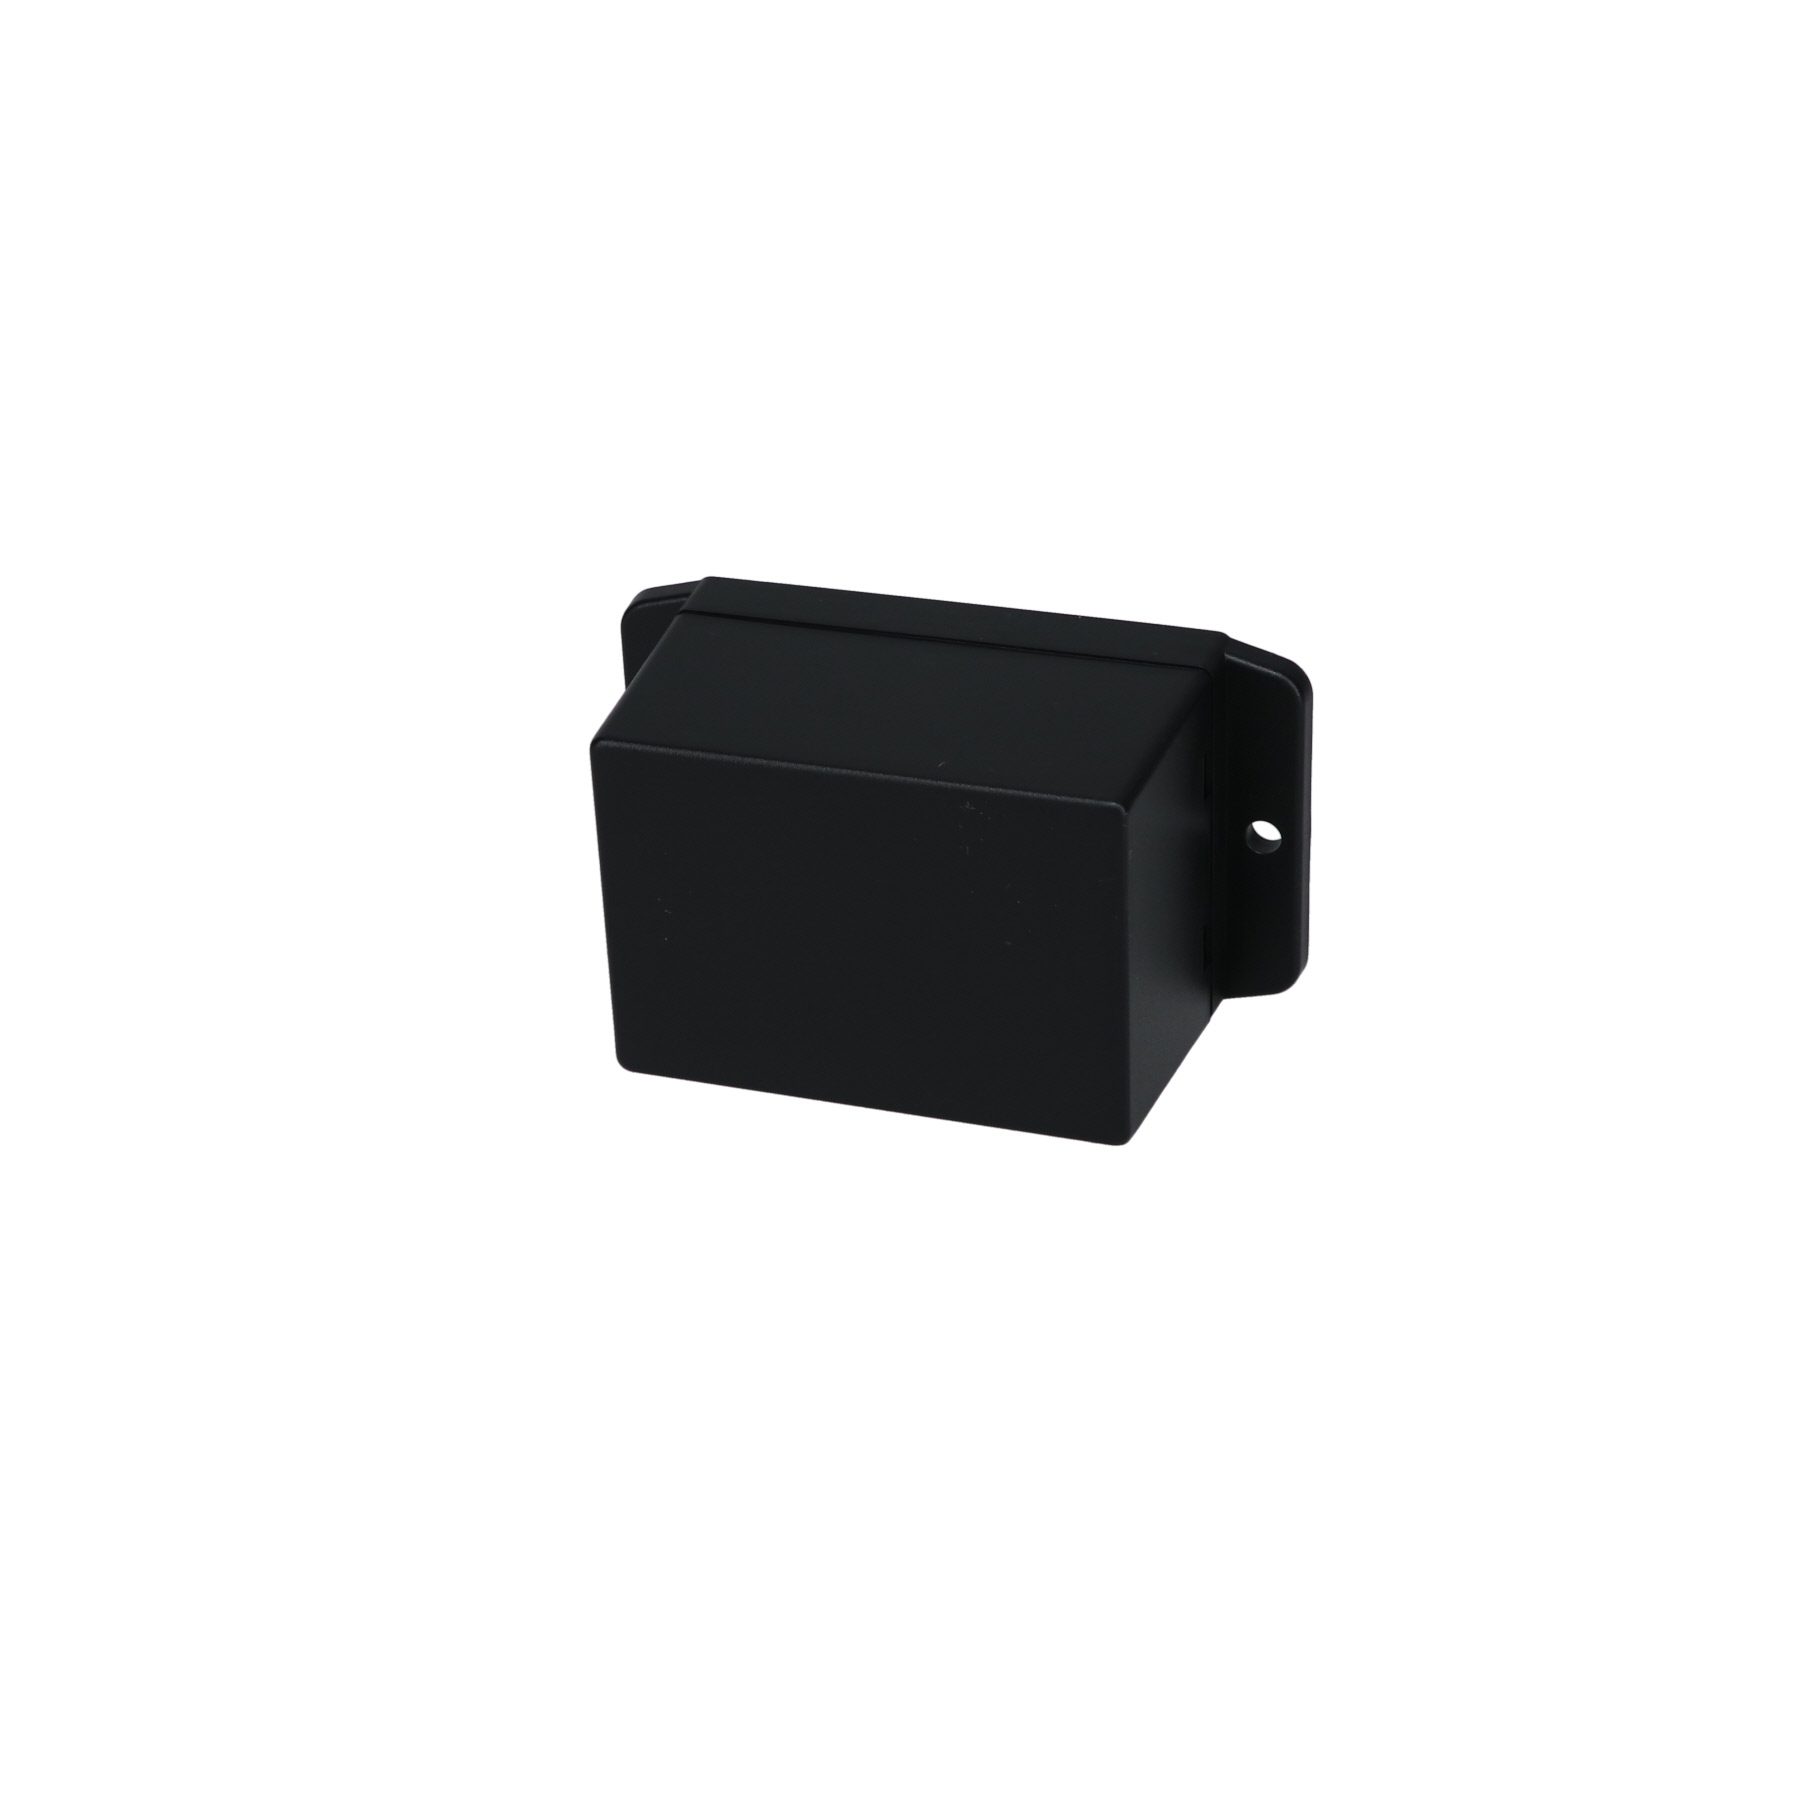 Snap Utility Box Black CU-18425-B